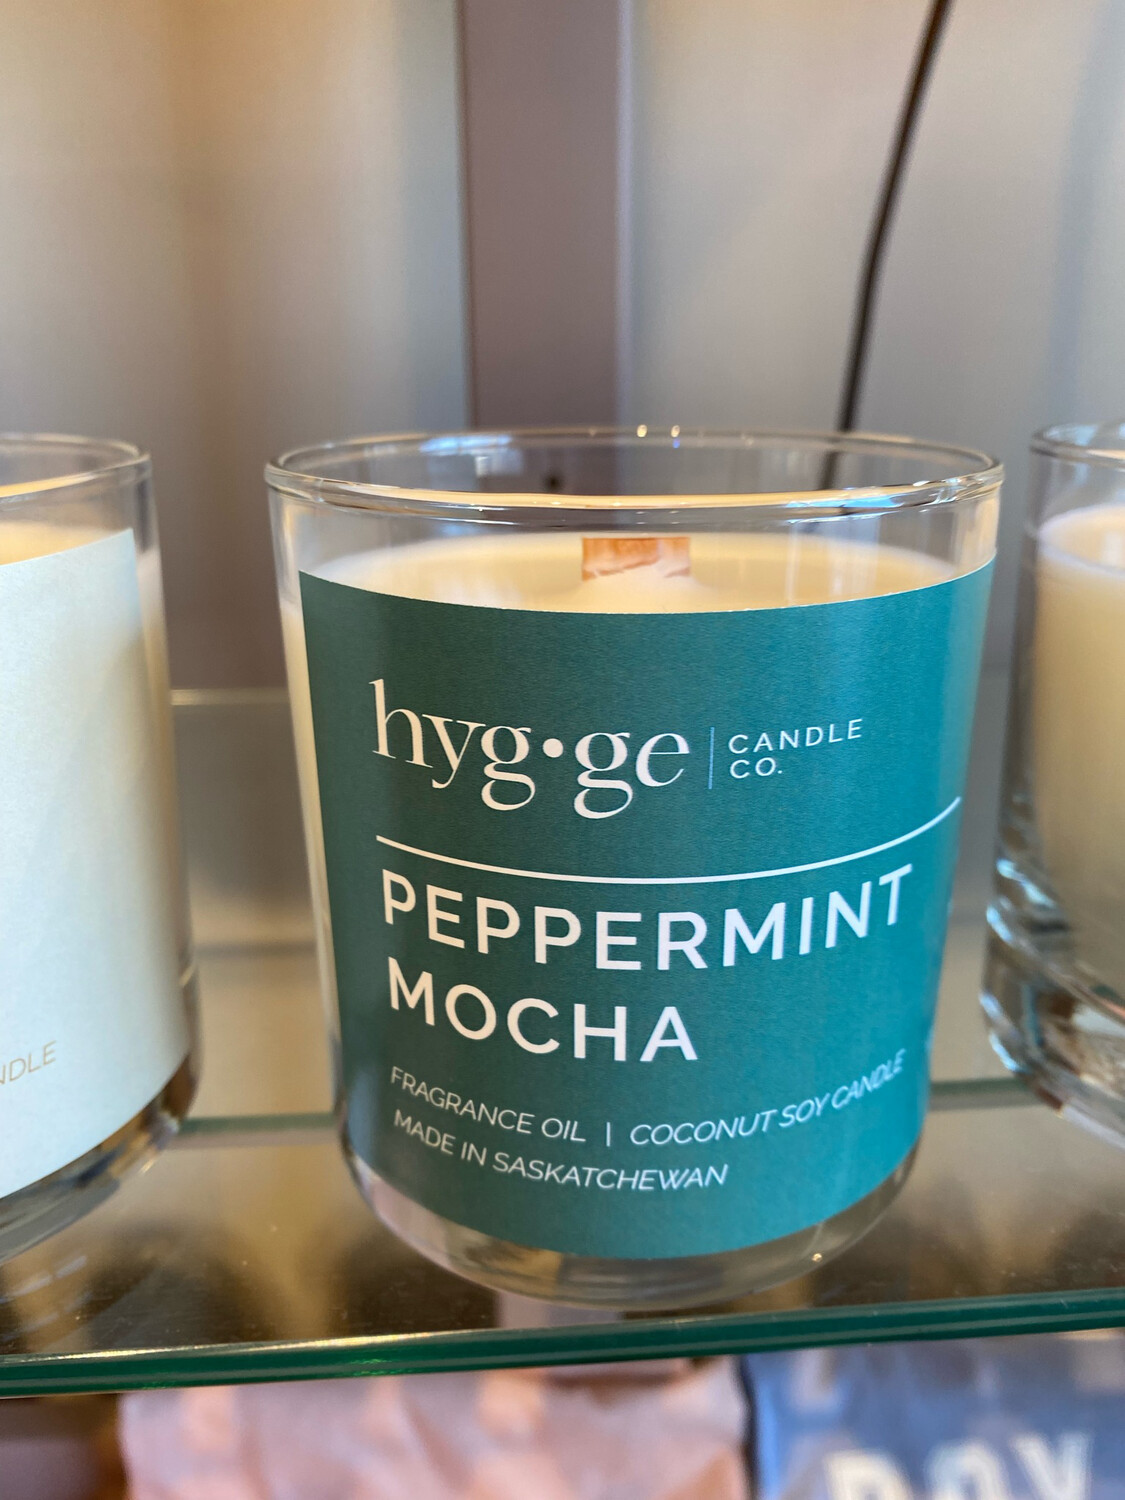 Peppermint Mocha Hygge Candle